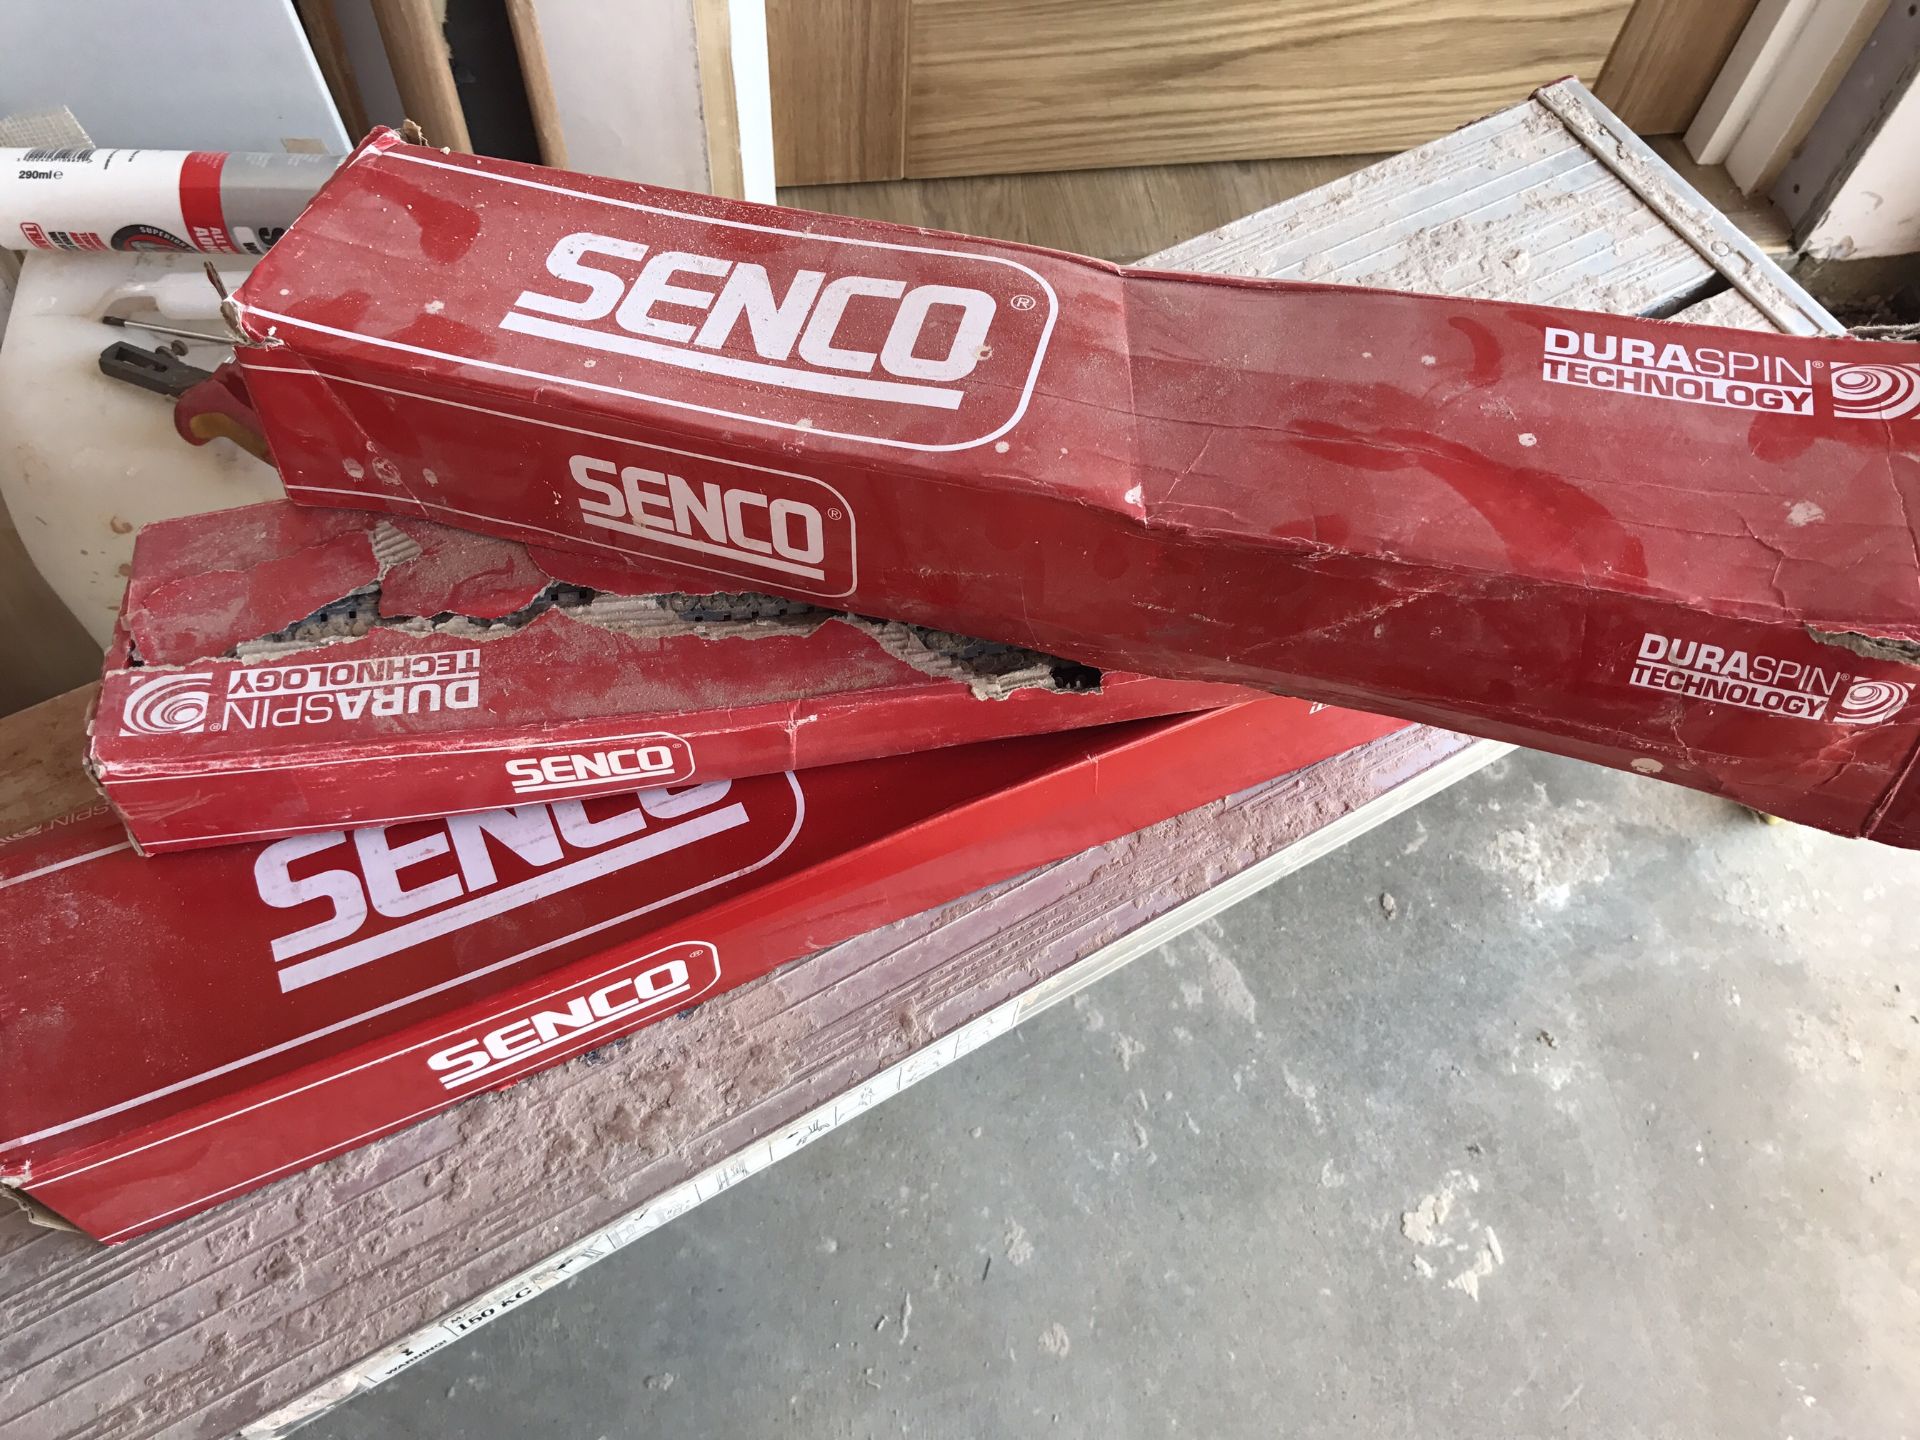 Senco Duraspin Self Feed Cordless Drywall Screw Gun DS275-18V - Image 4 of 4